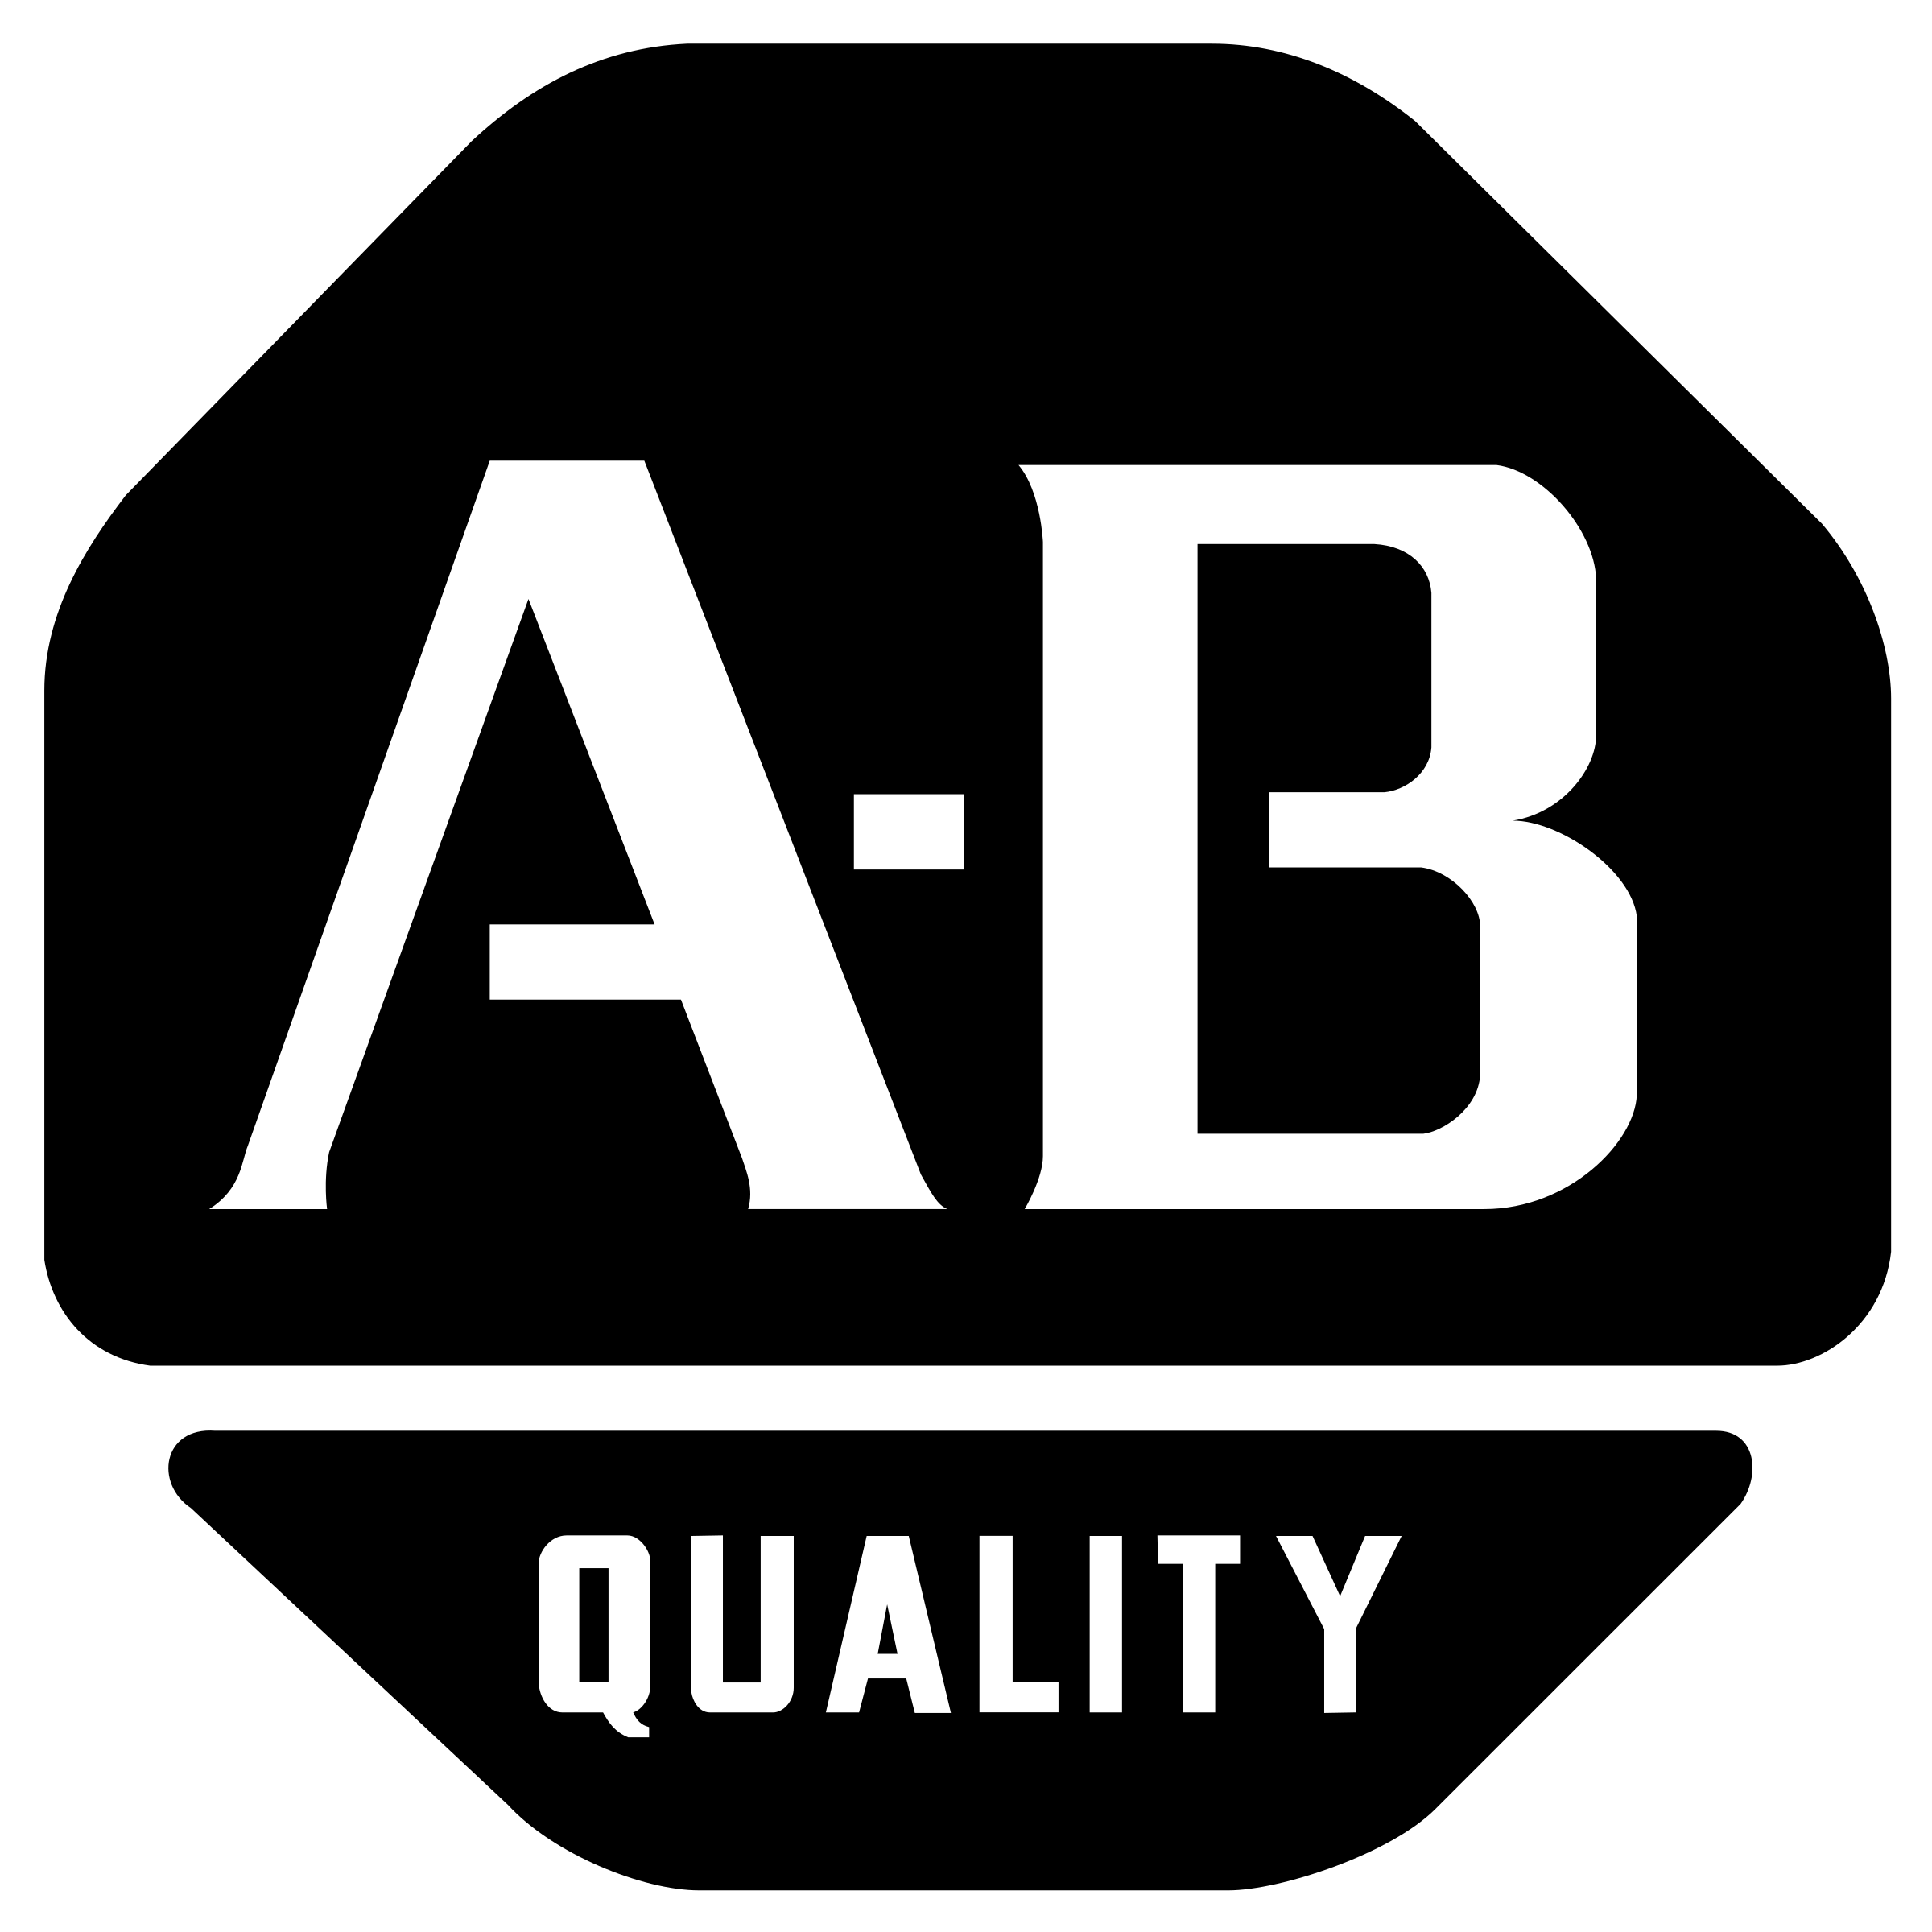 Welding clipart svg. A b quality logo